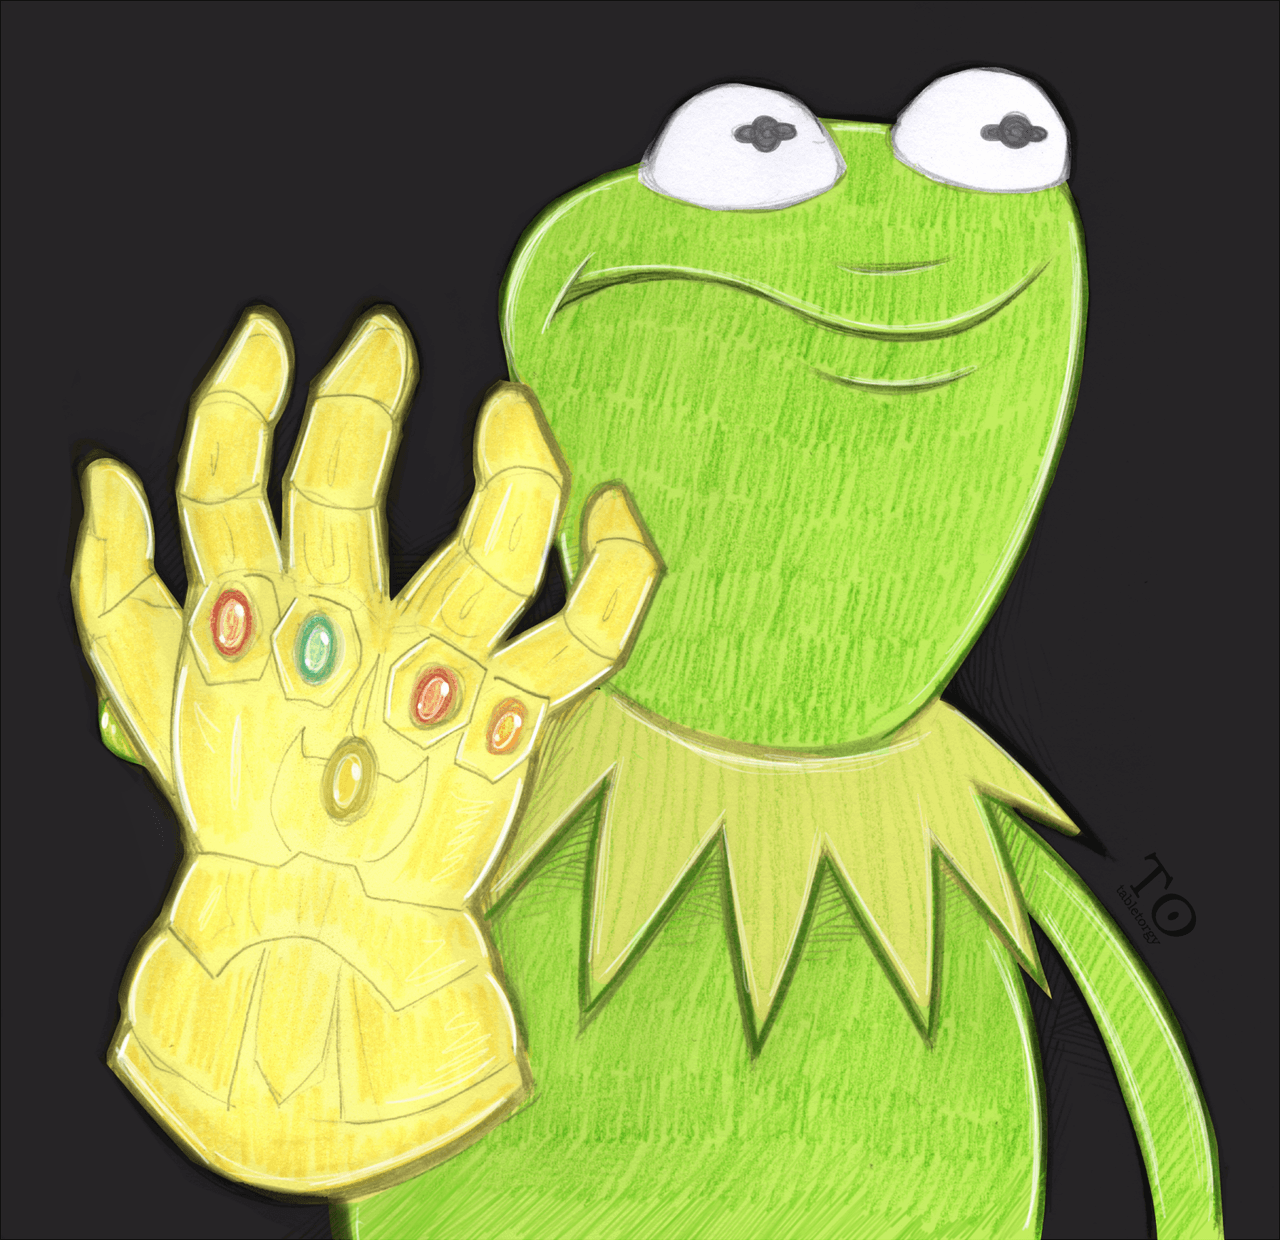 Kermit with the Infinity Gauntlet. Kermit the Frog